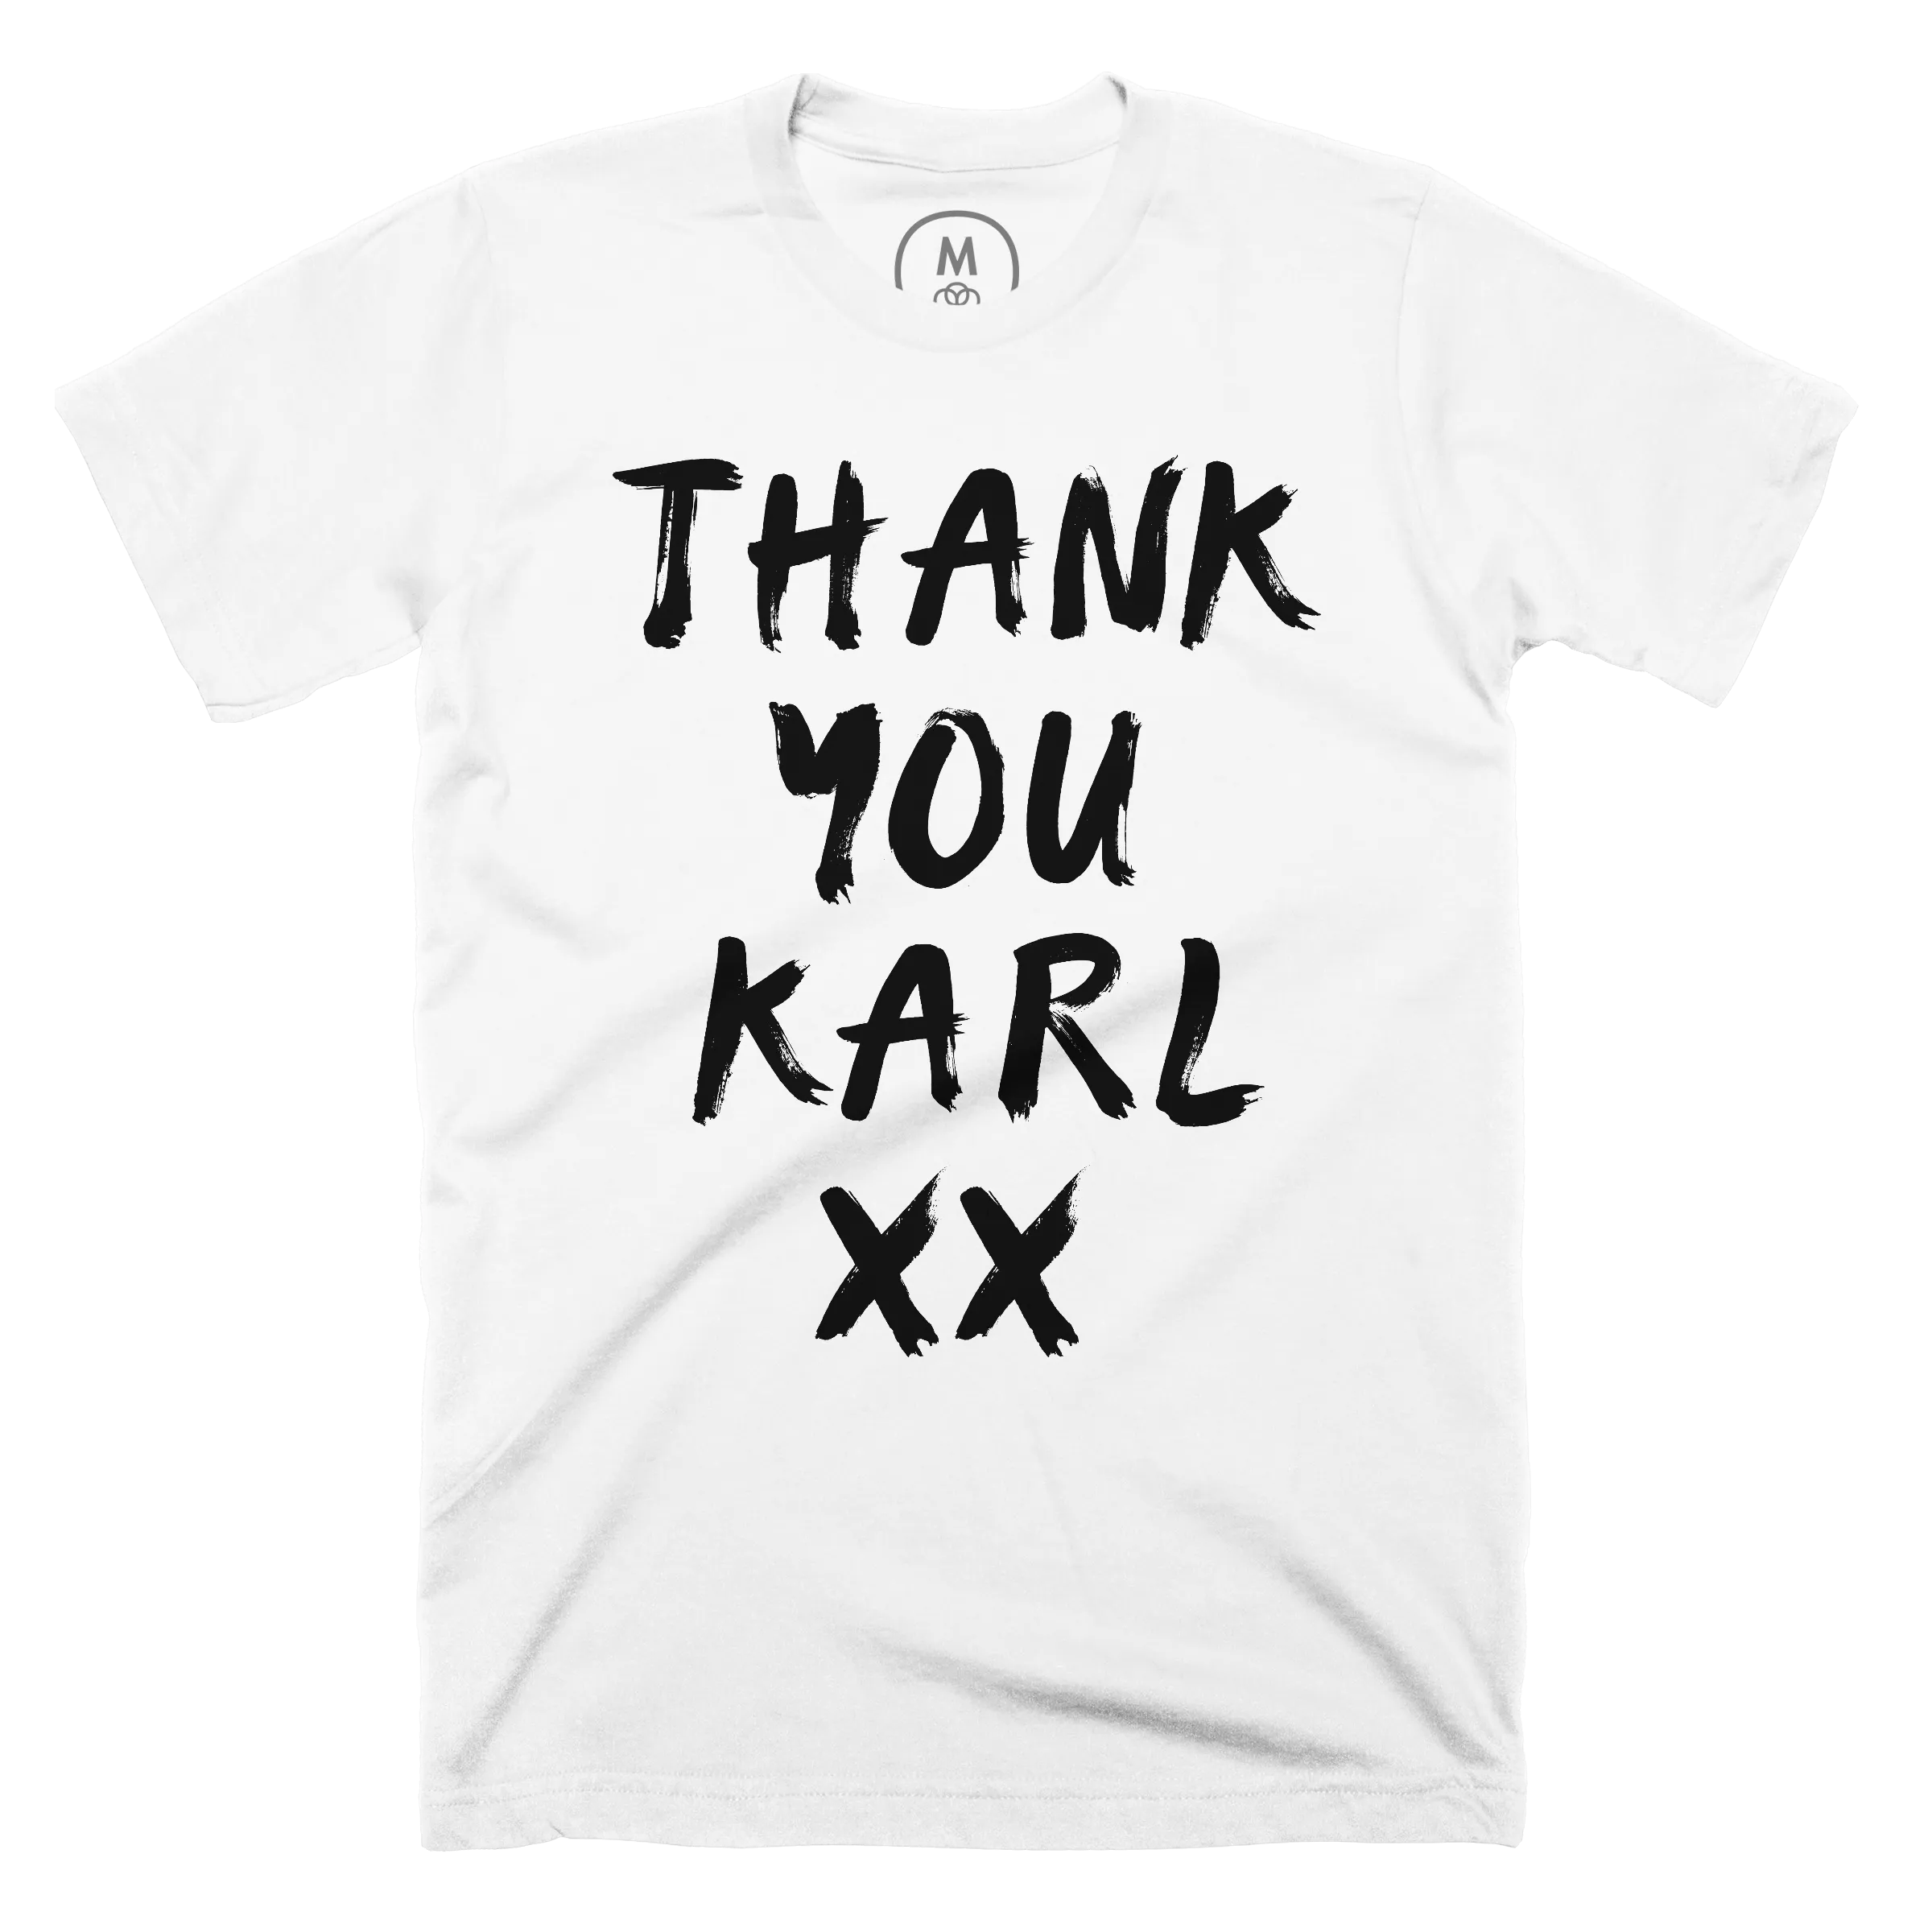 Thank You Karl” graphic tee by Scott P. | Cotton Bureau